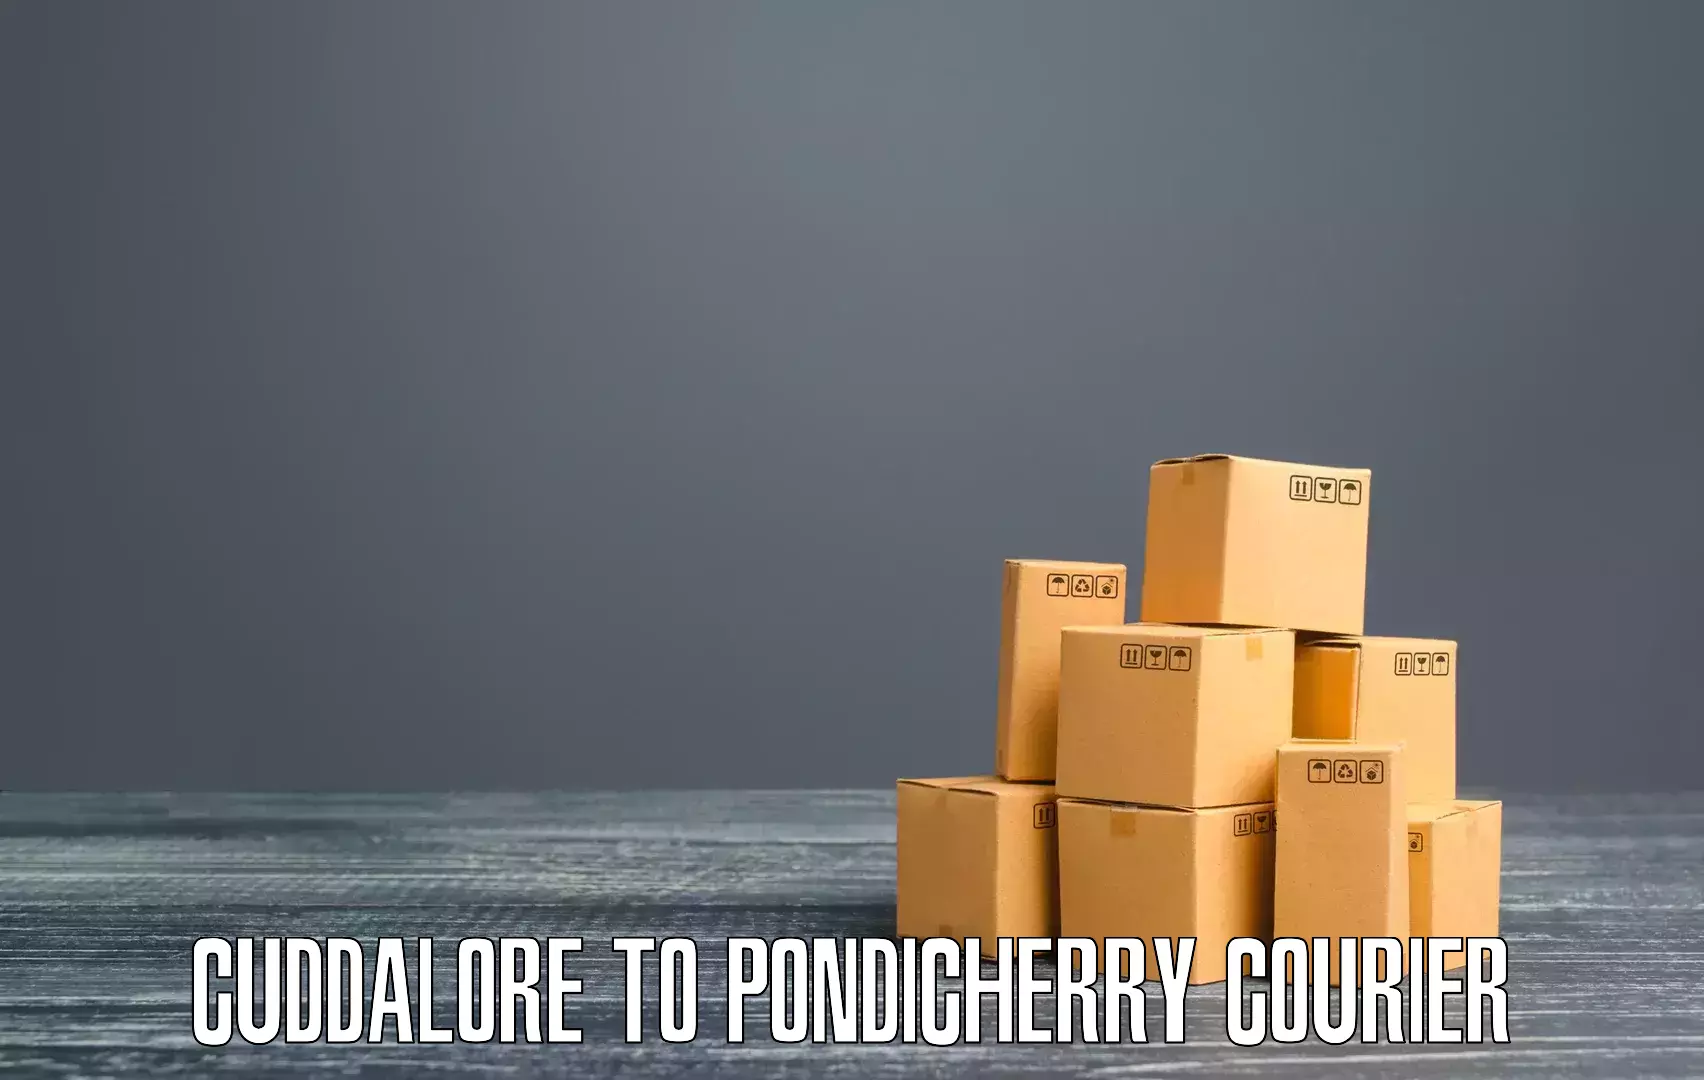 Logistics service provider Cuddalore to Pondicherry